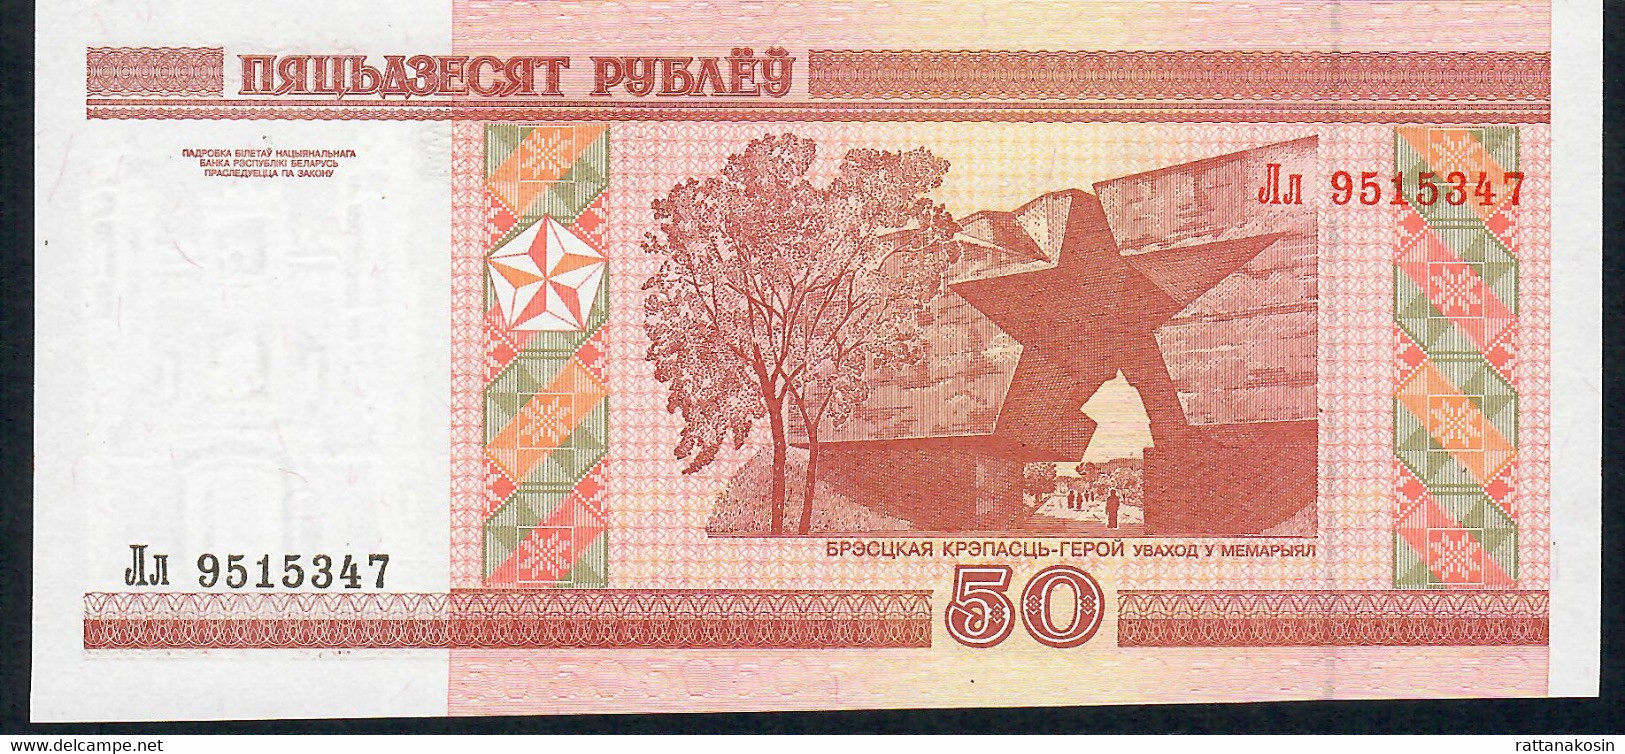 BELARUS  P25  50  RUBLES    2000    UNC. - Belarus